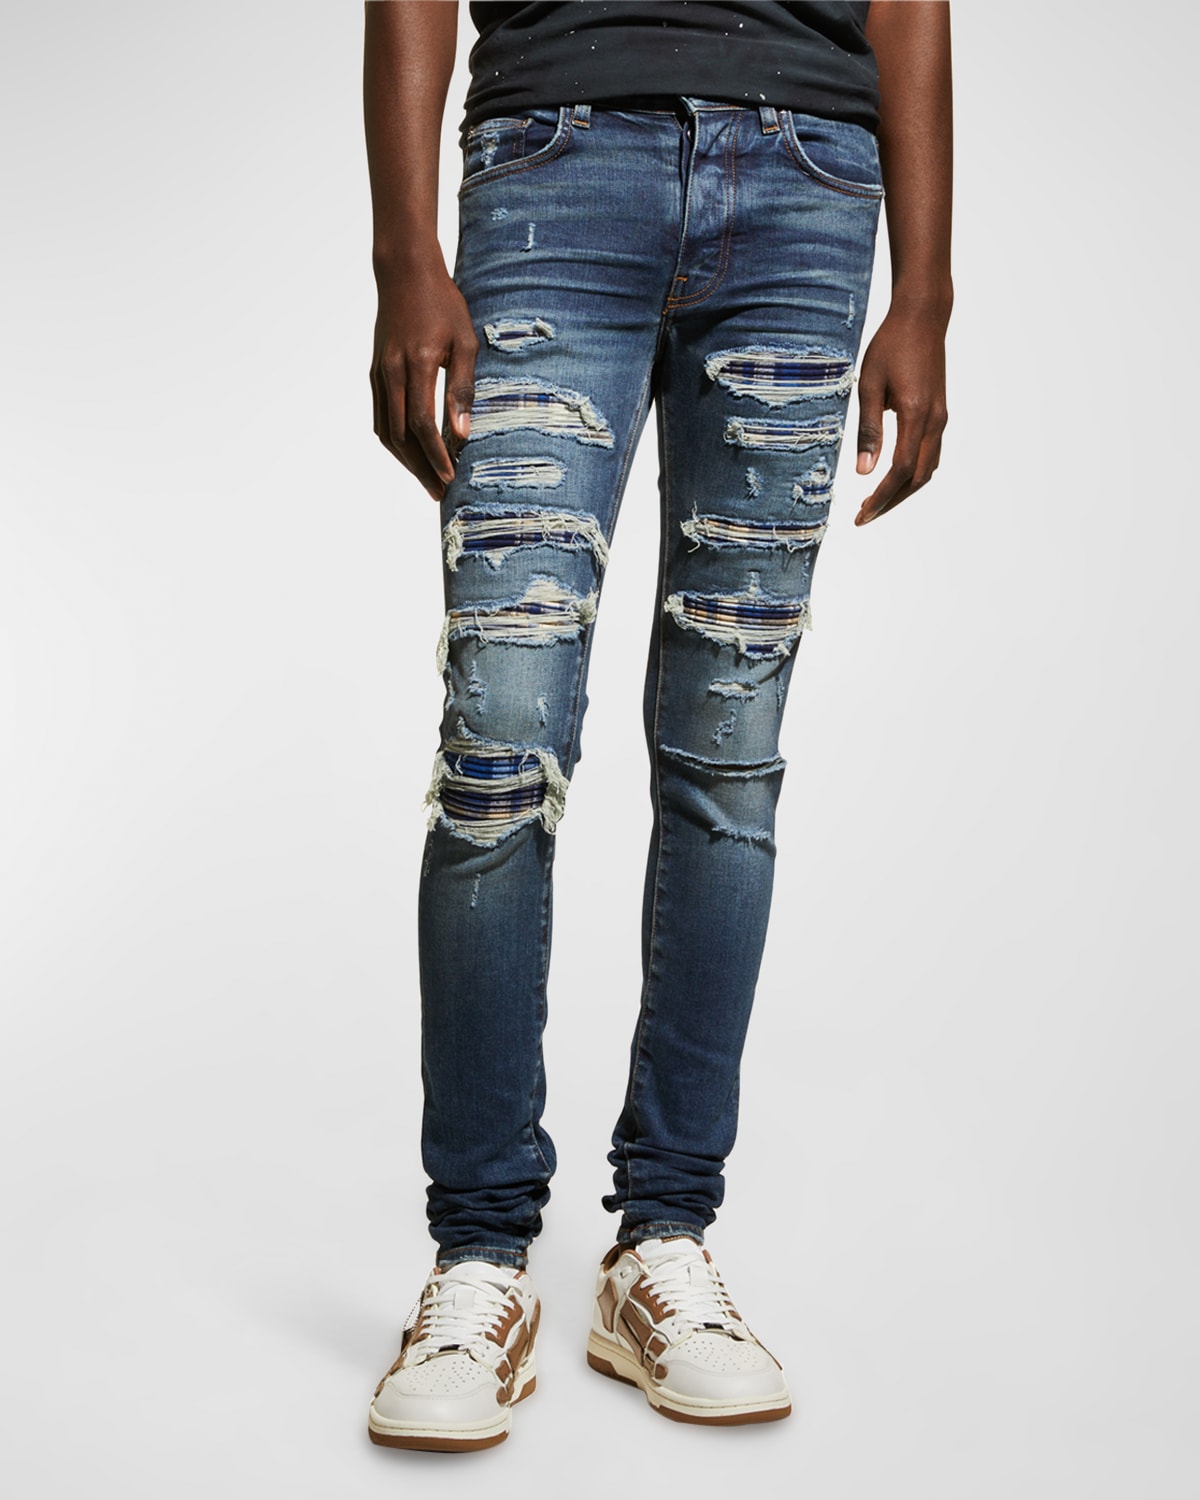 Men's Plaid Bandana Thrasher Jeans